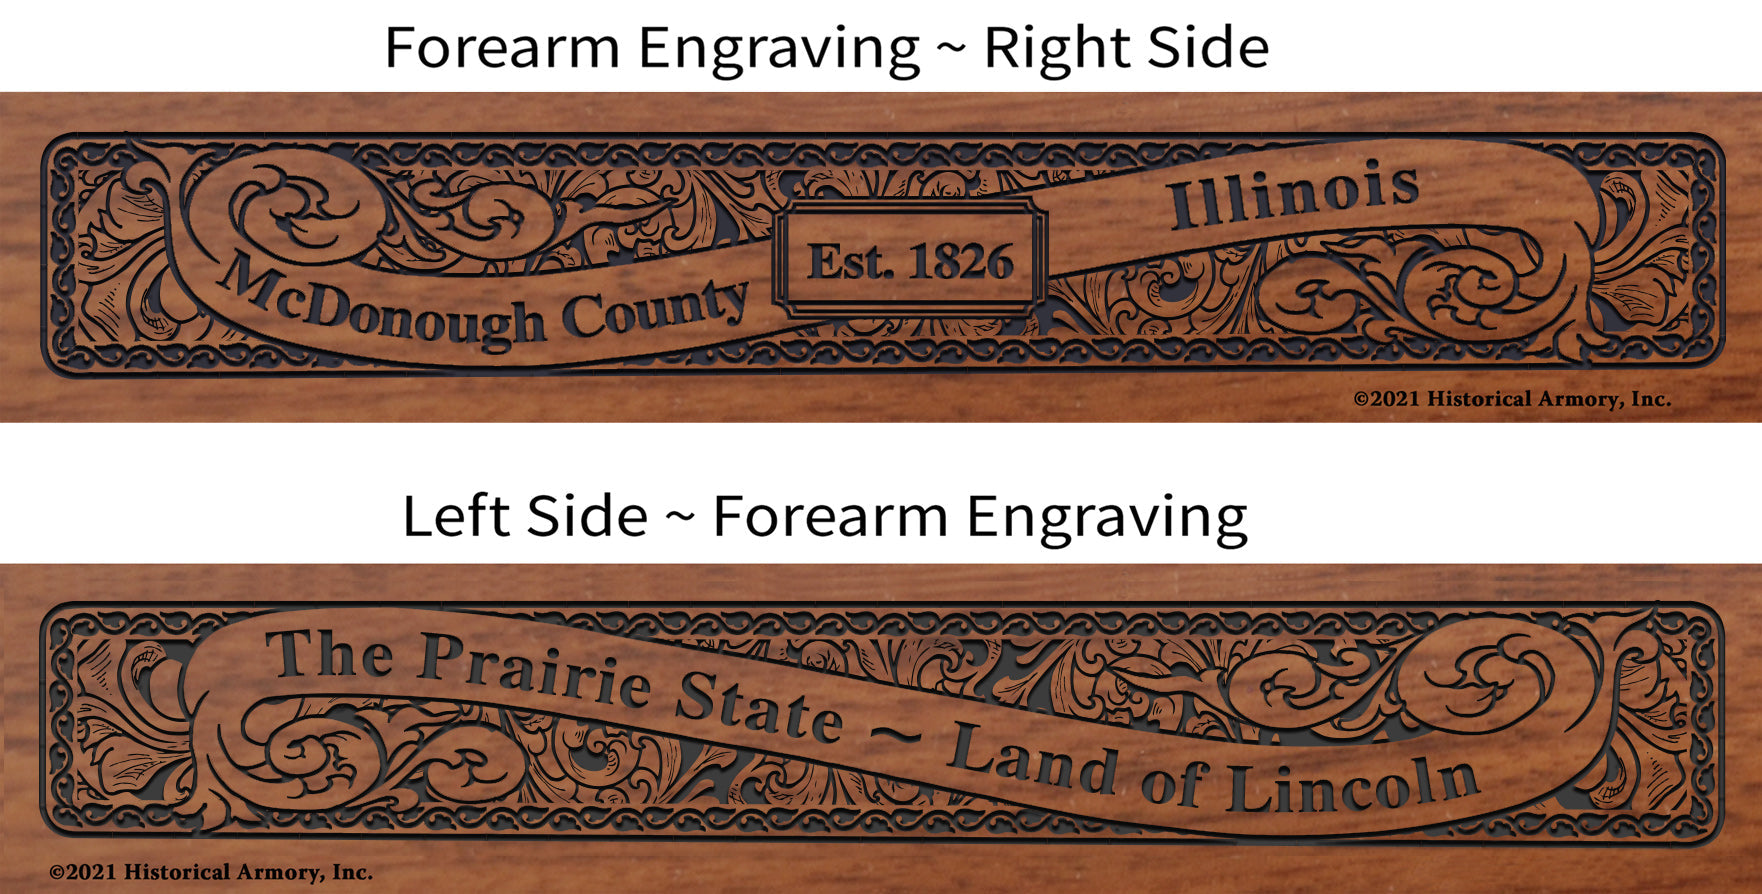 McDonough County Illinois Establishment and Motto History Engraved Rifle Forearm